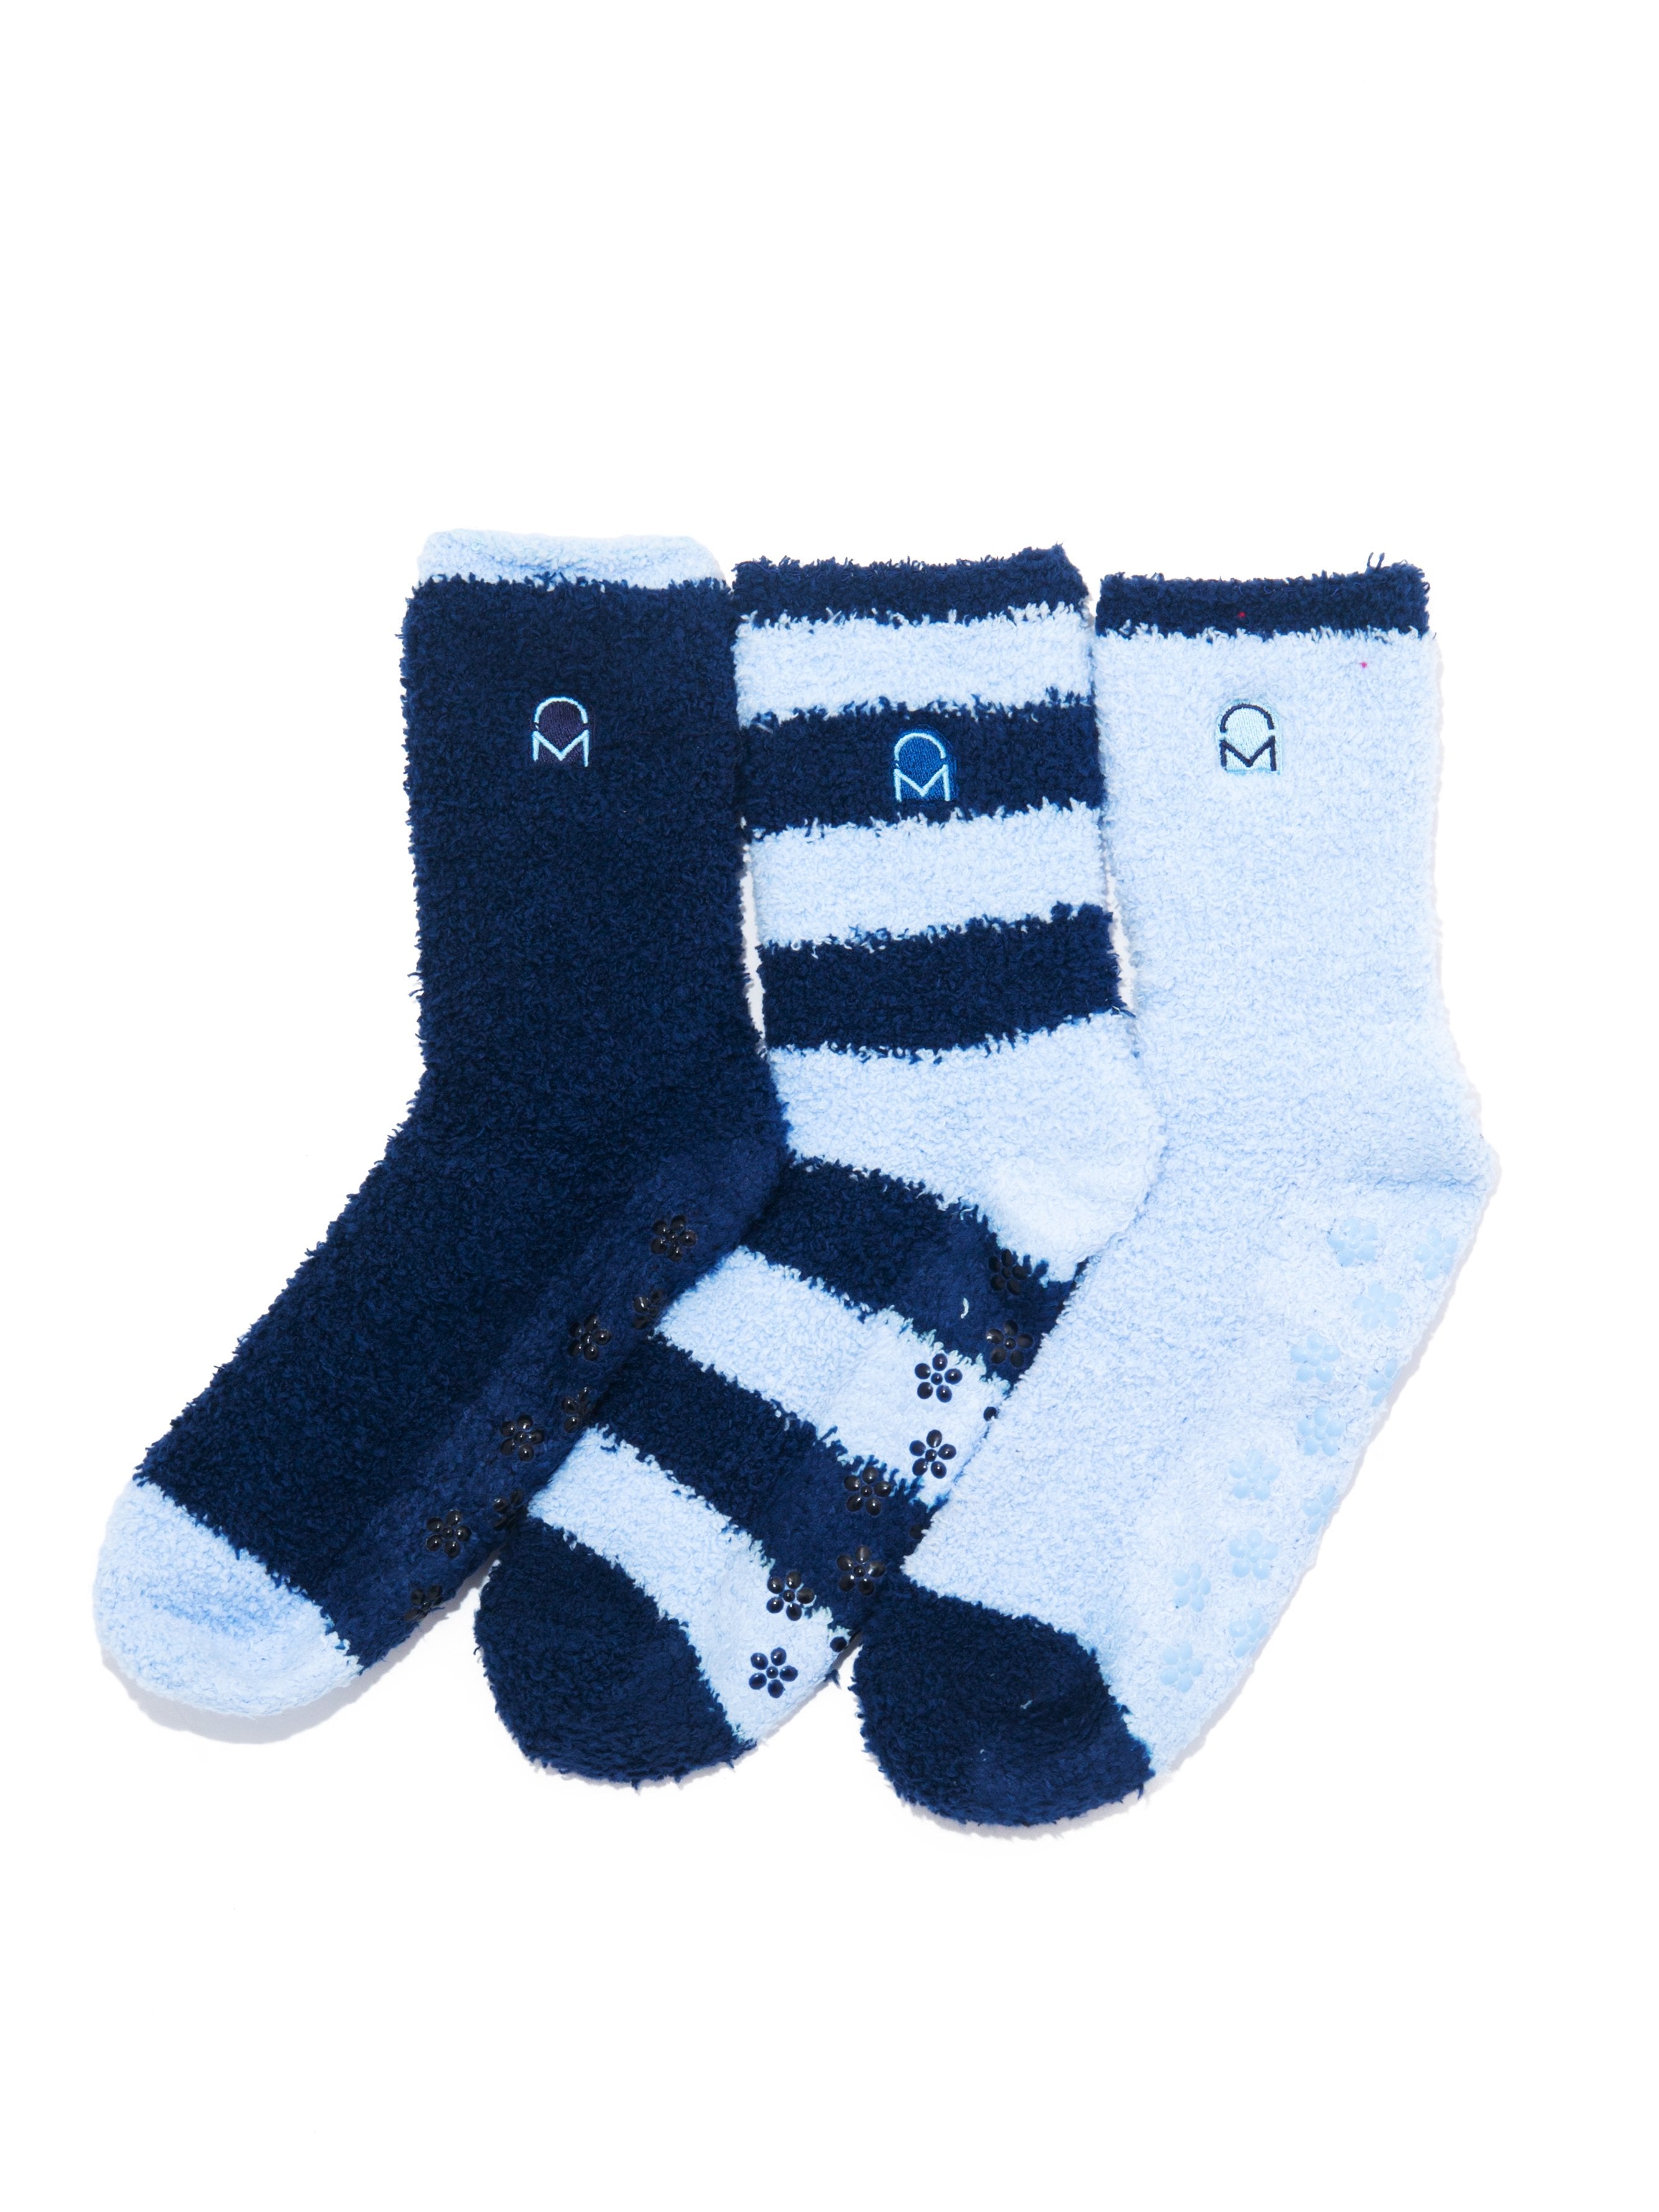 Women's (3 Pairs) Soft Anti-Skid Fuzzy Winter Crew Socks - Set D17